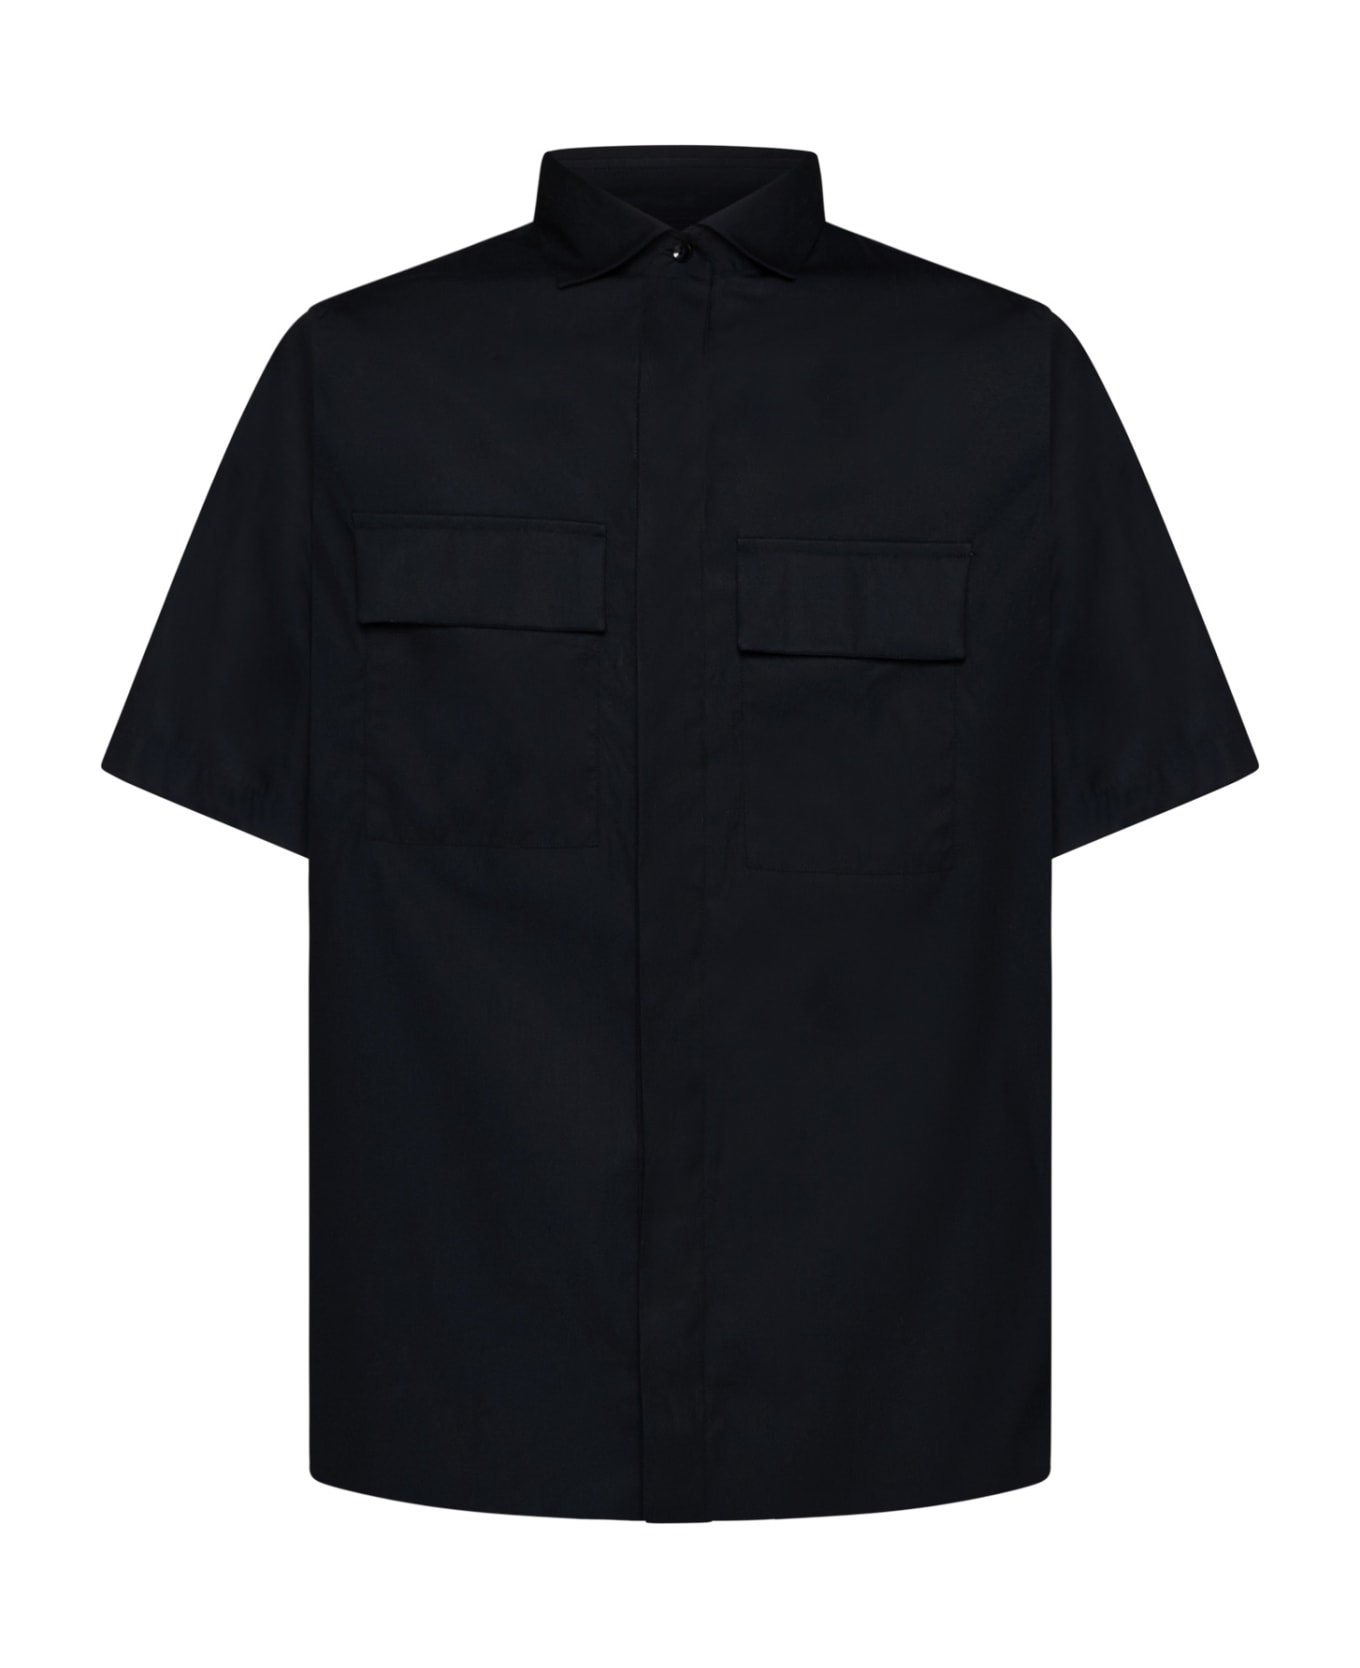 Low Brand Shirt - Jet black シャツ